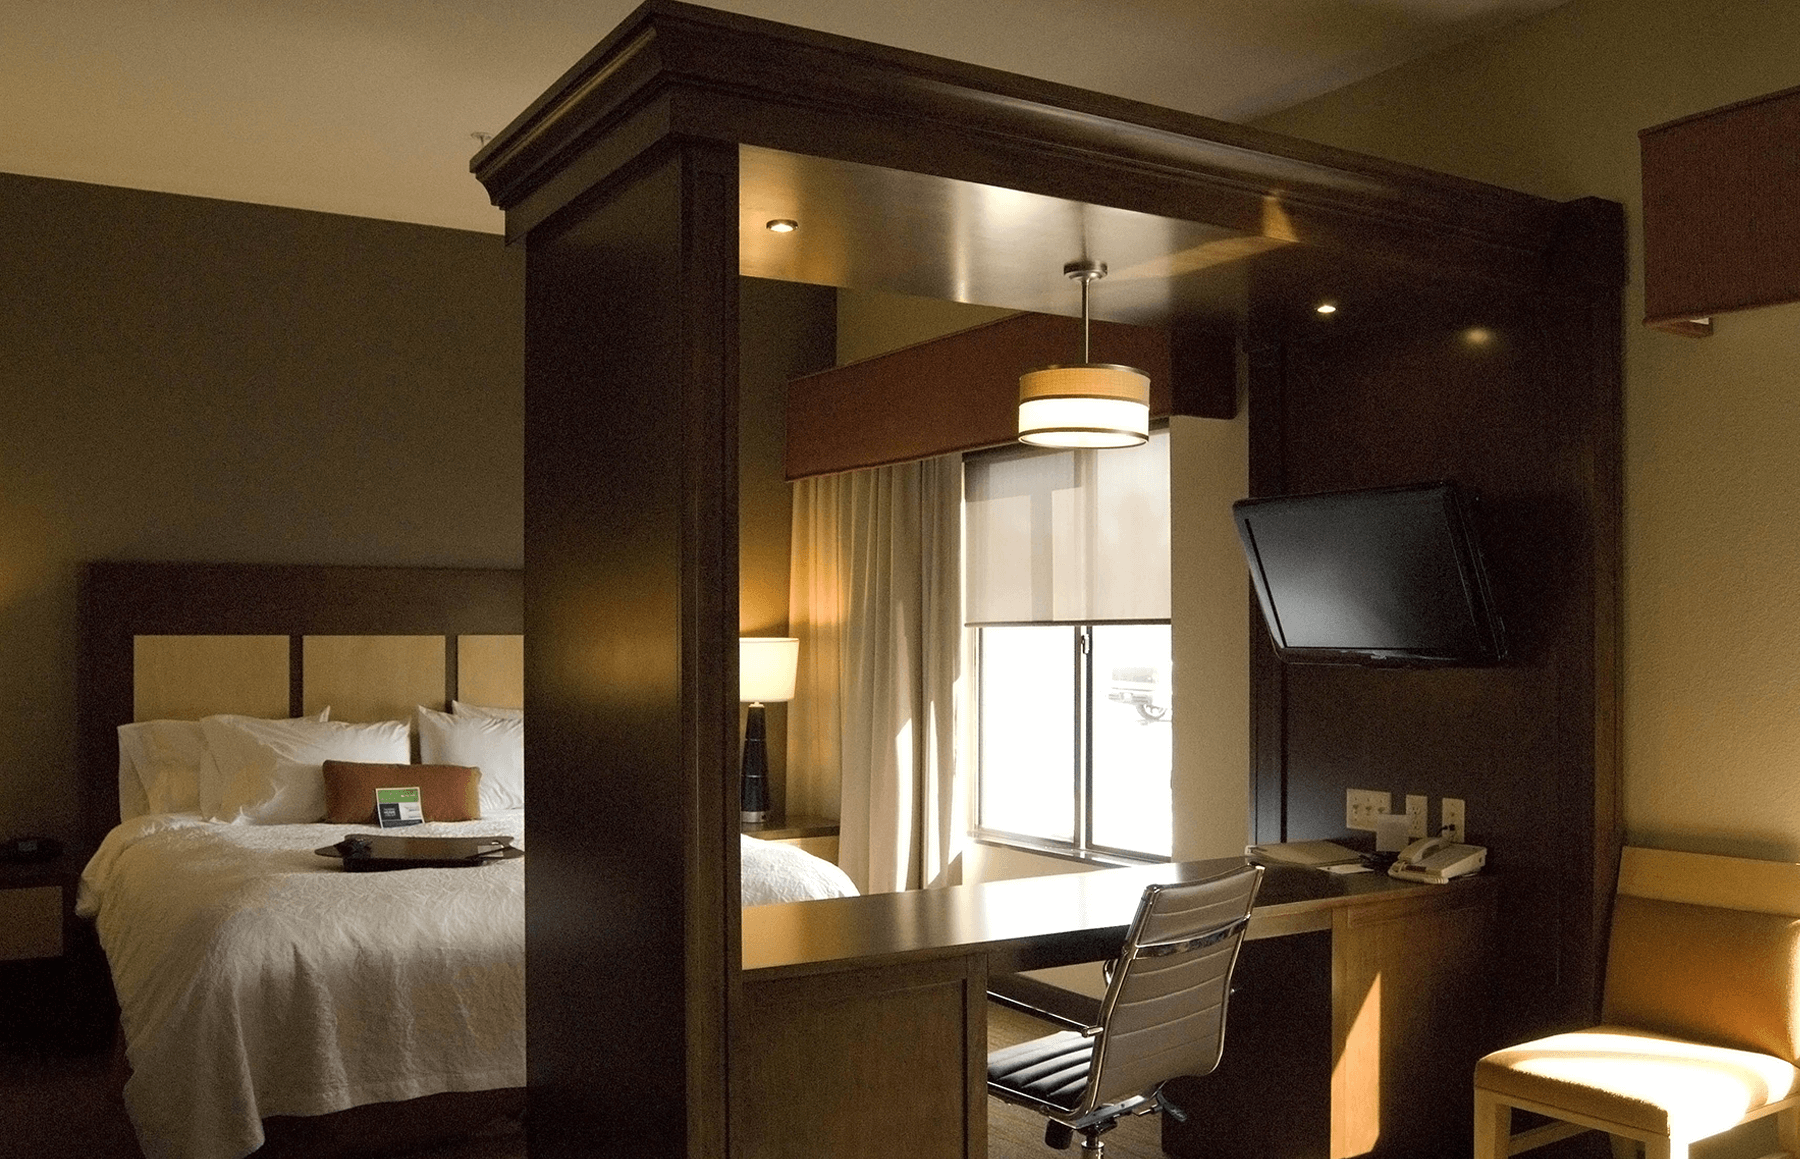  Hampton Inn and Suites Spokane room interior king bed and desk 